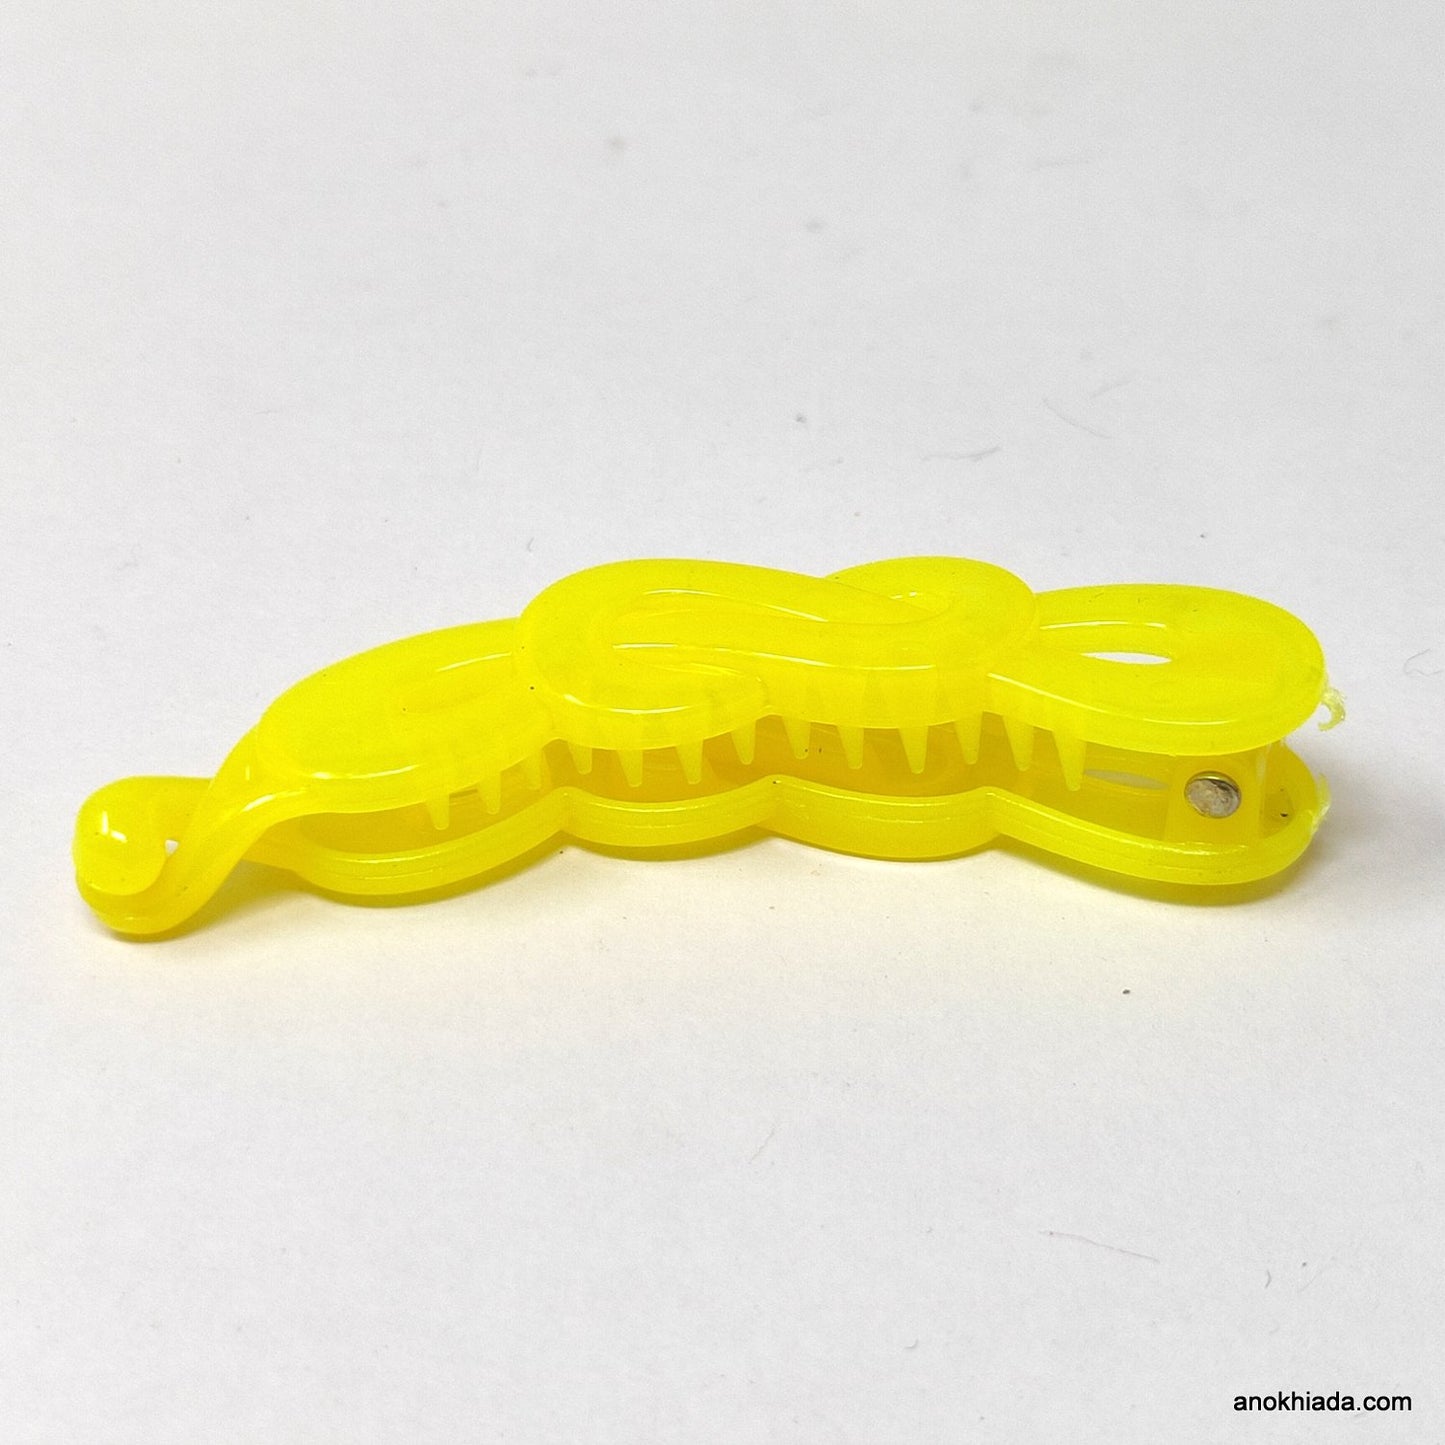 Translucent Infinity Design Small Yellow Banana Hair Clip for Girls & Woman (98-14C Banana Hair Clips)